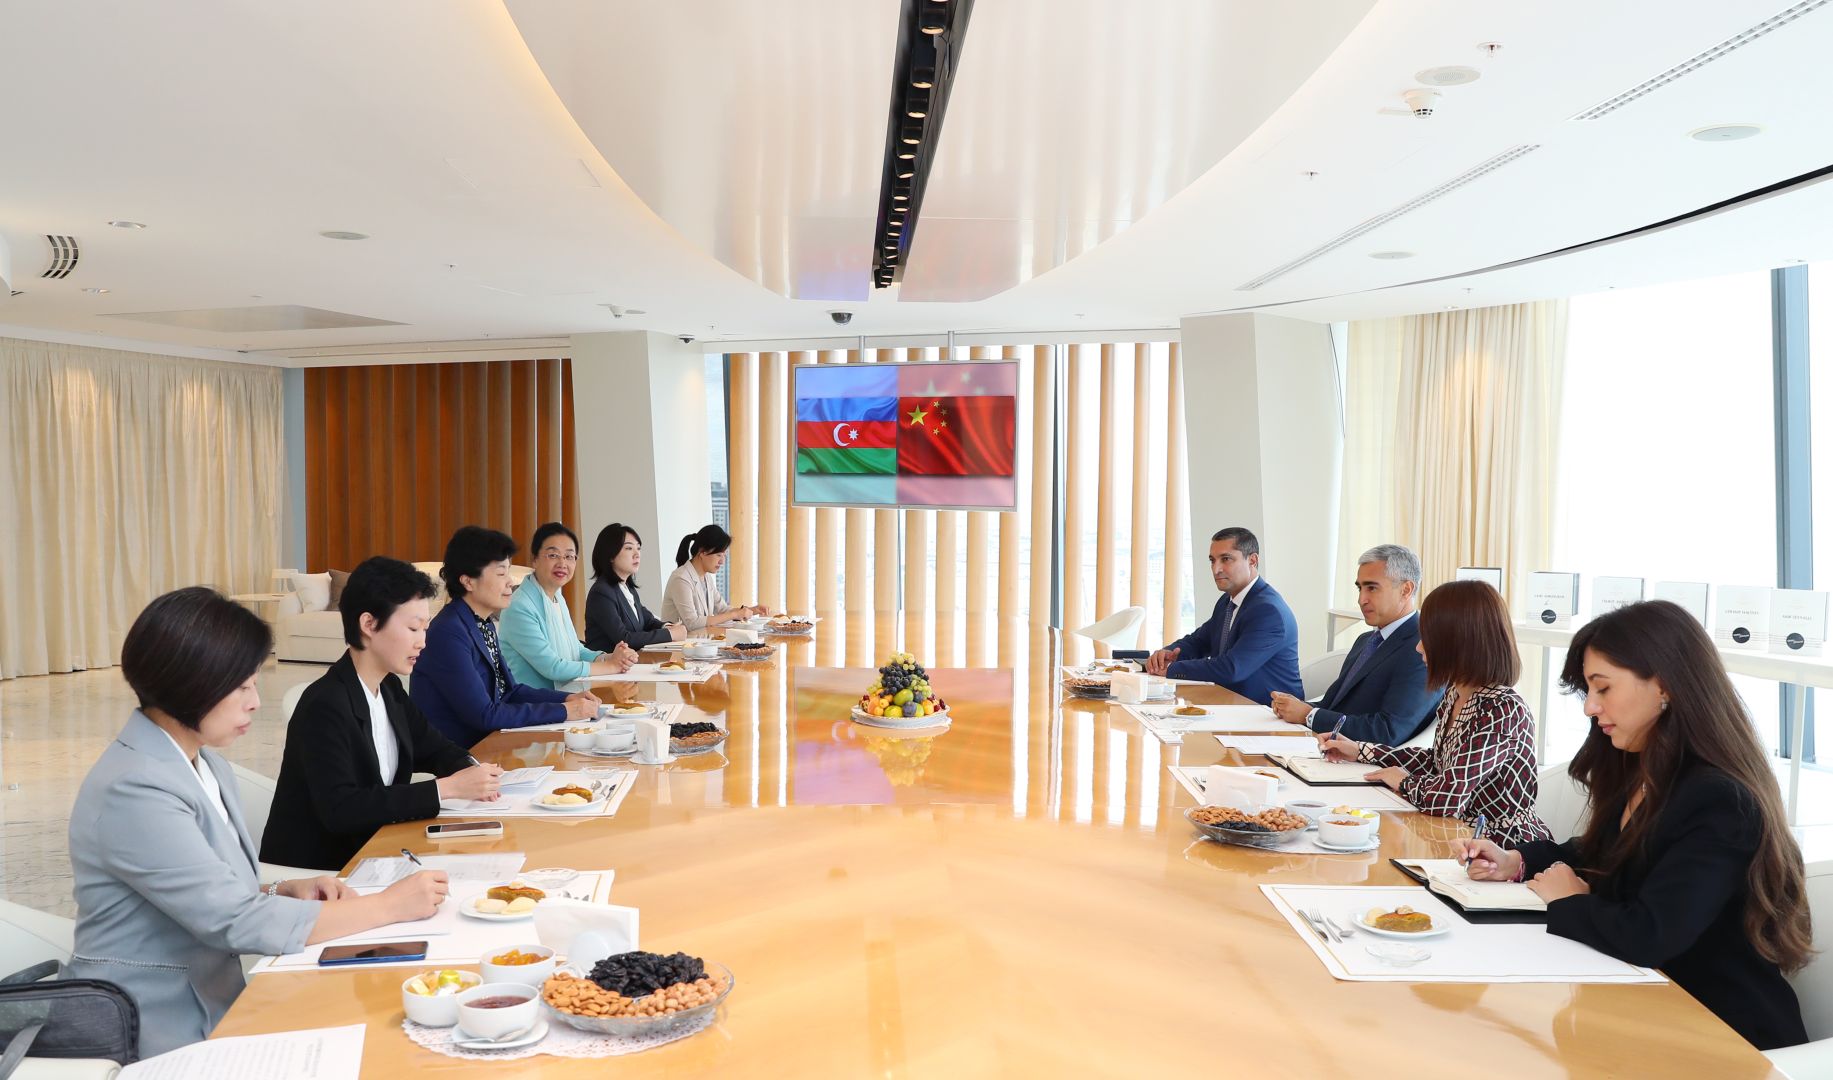 Representatives of Shanghai Cooperation Organization visit Heydar Aliyev Foundation [PHOTOS]